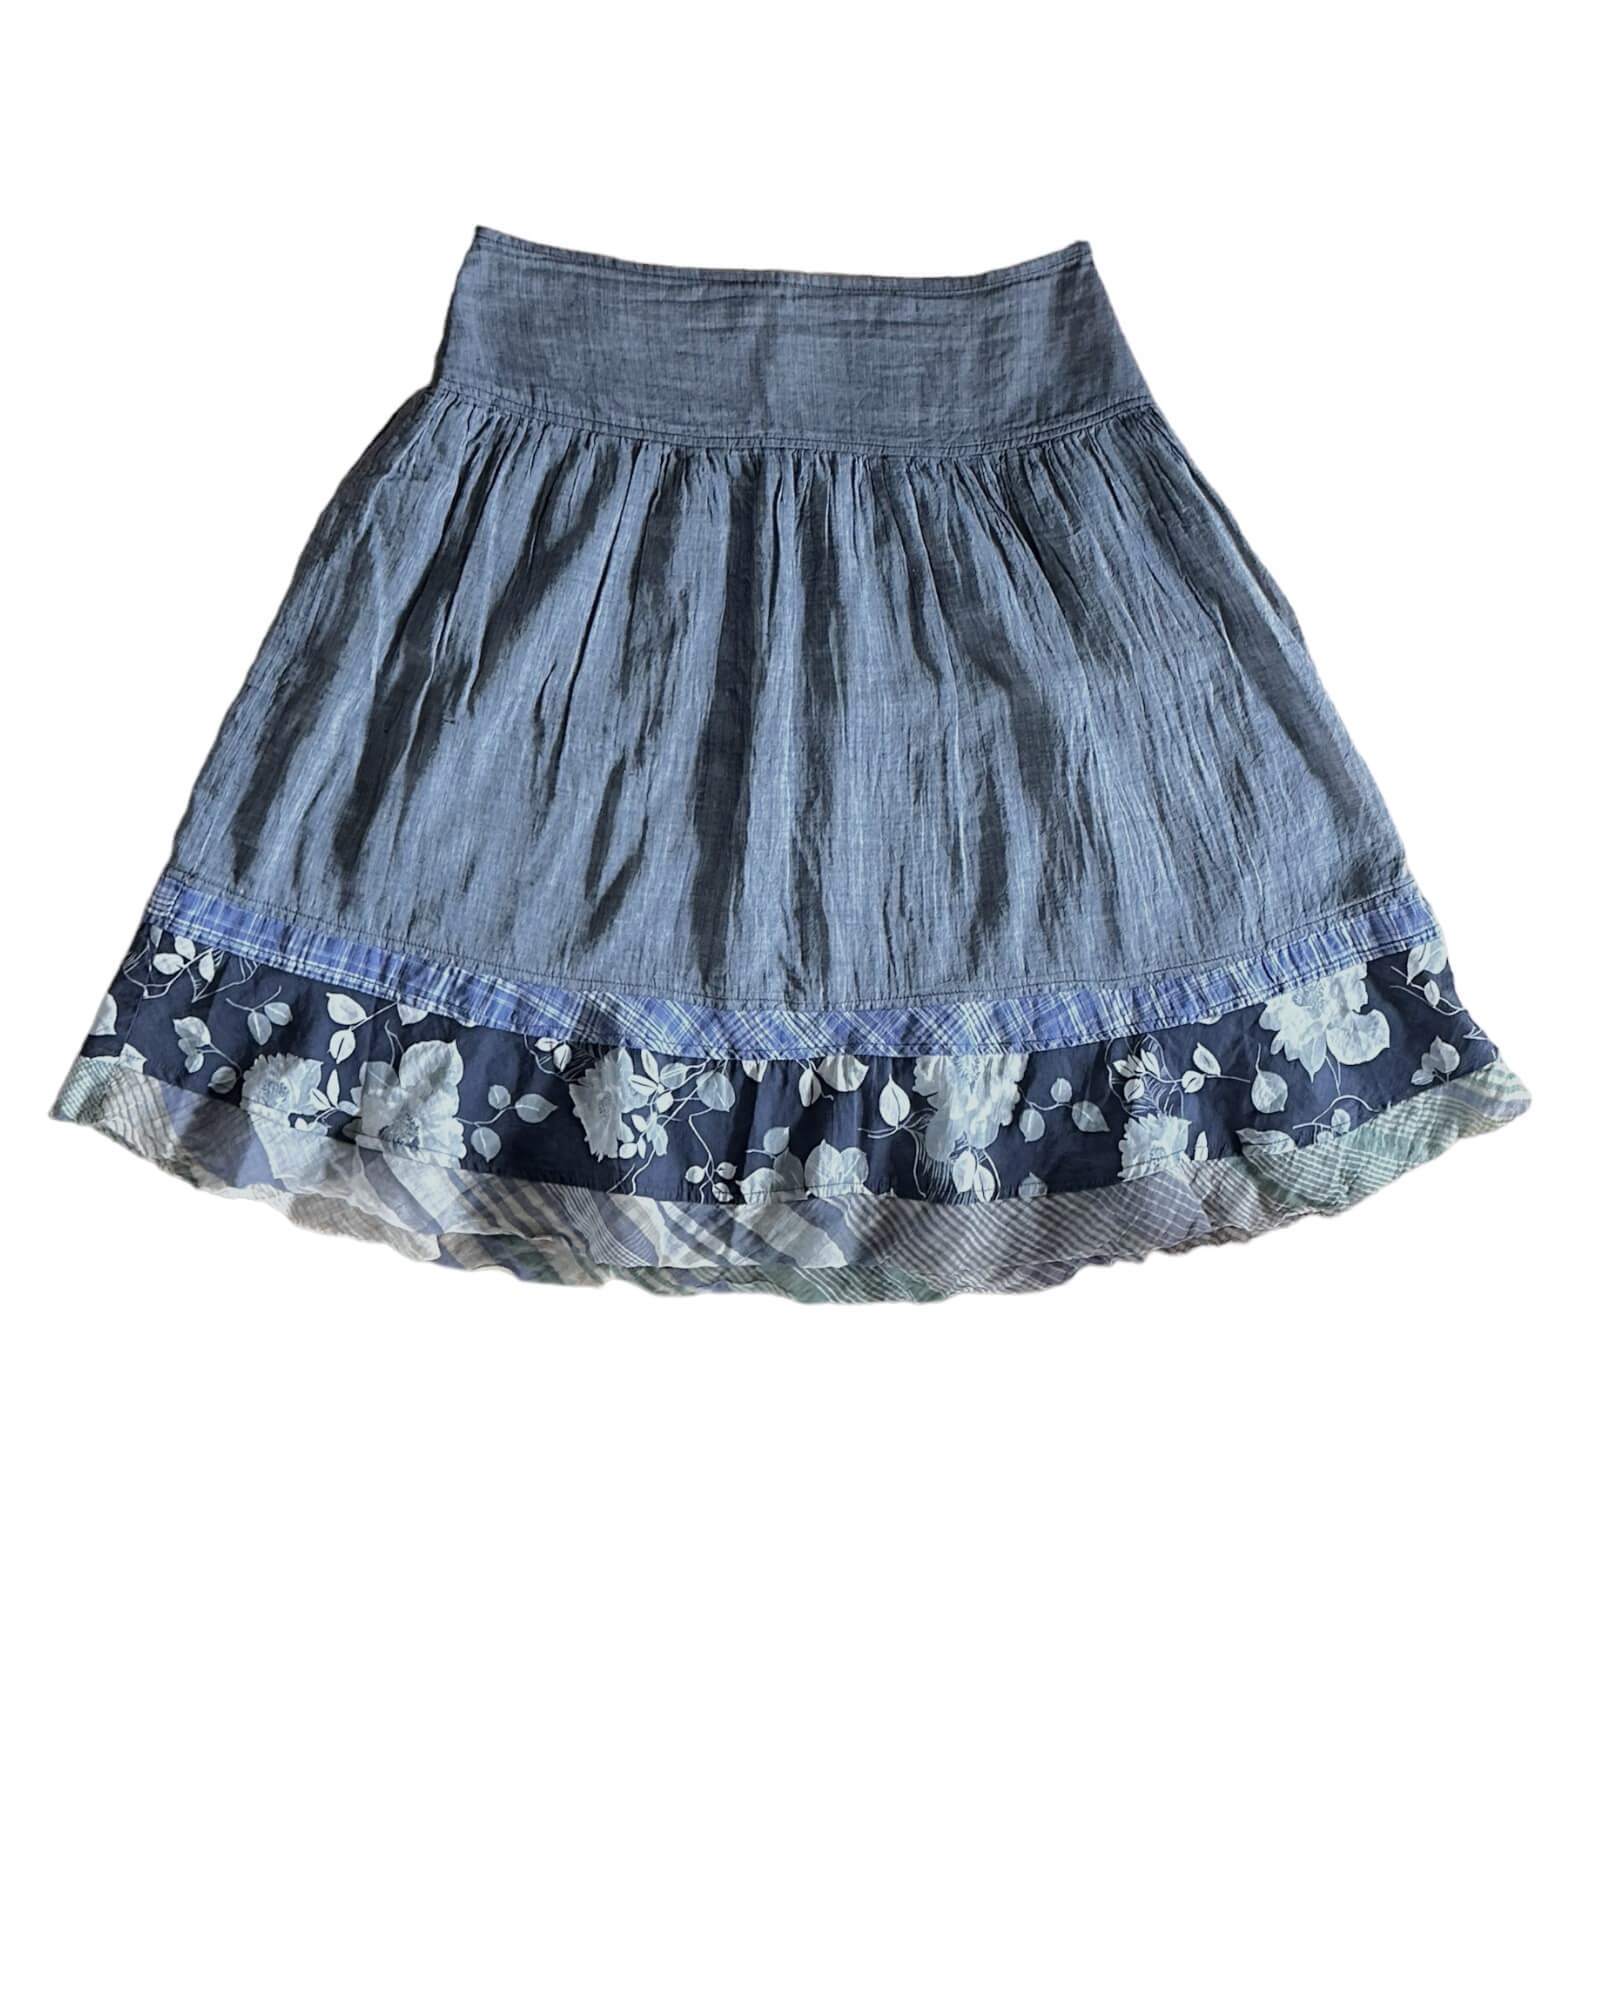 Soft Summer NEESH by DAR for ANTHROPOLOGIE patchwork chambray trim midi skirt